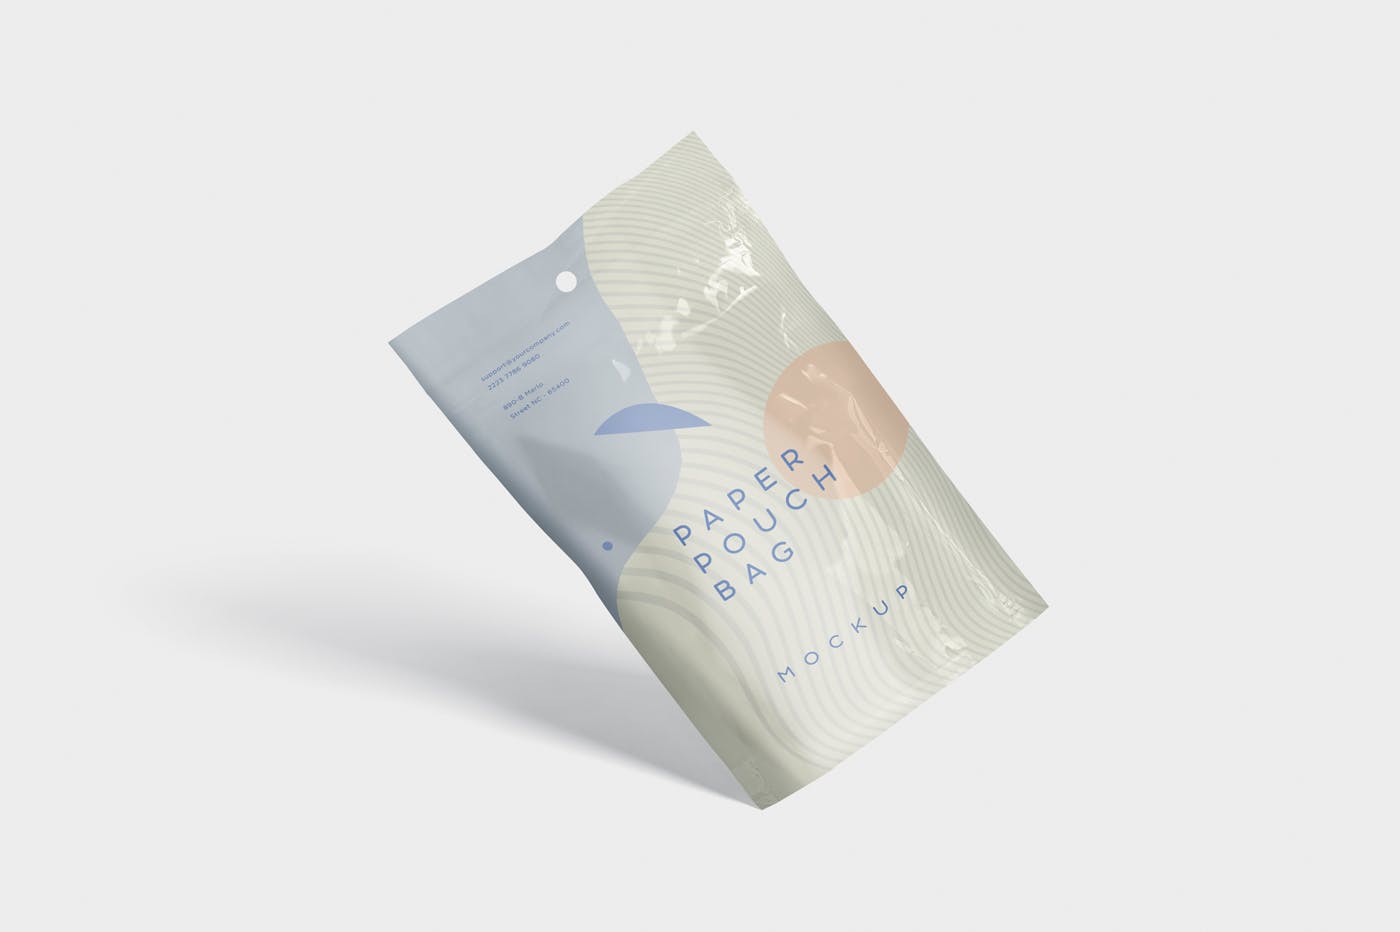 小尺寸零食包装纸袋设计图样机 Paper Pouch Bag Mockup in Small Size插图(4)